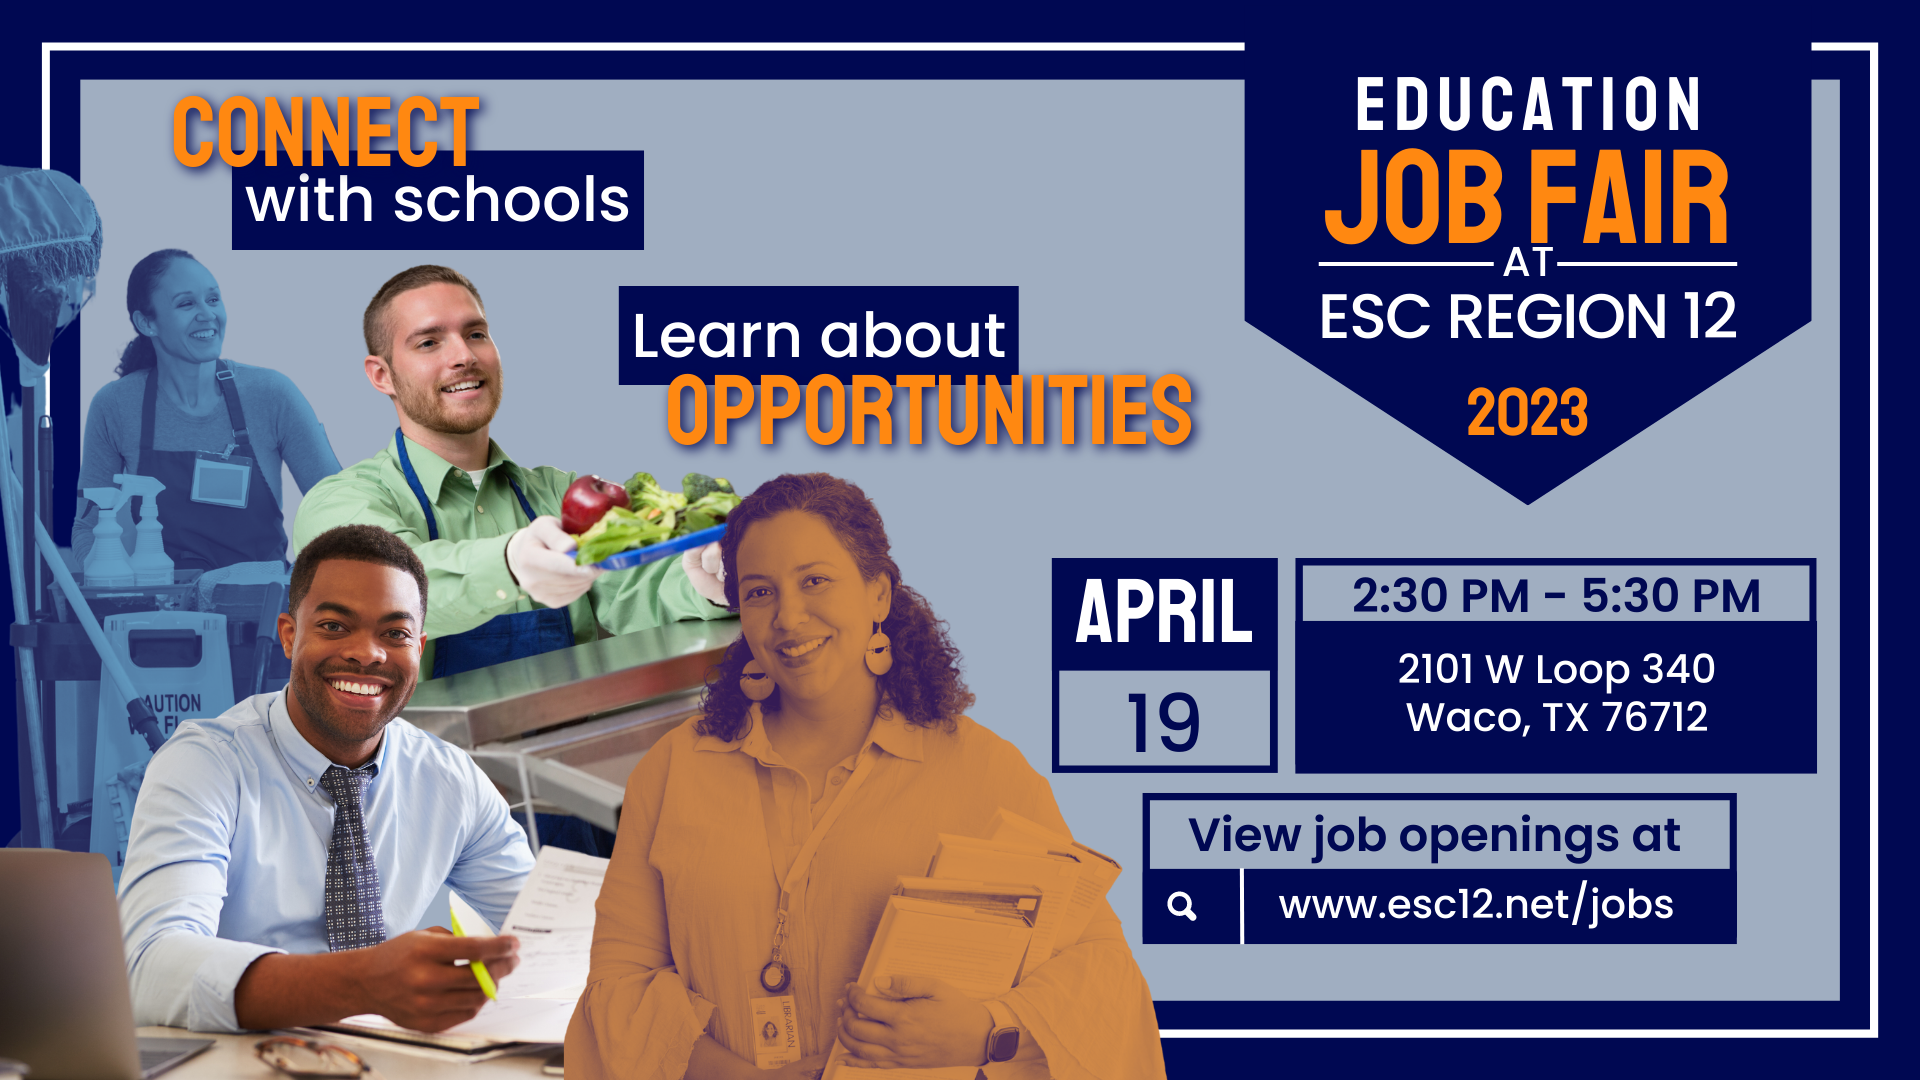 ESC Region 12 2023 Education Job Fair on April 19 from 230-530